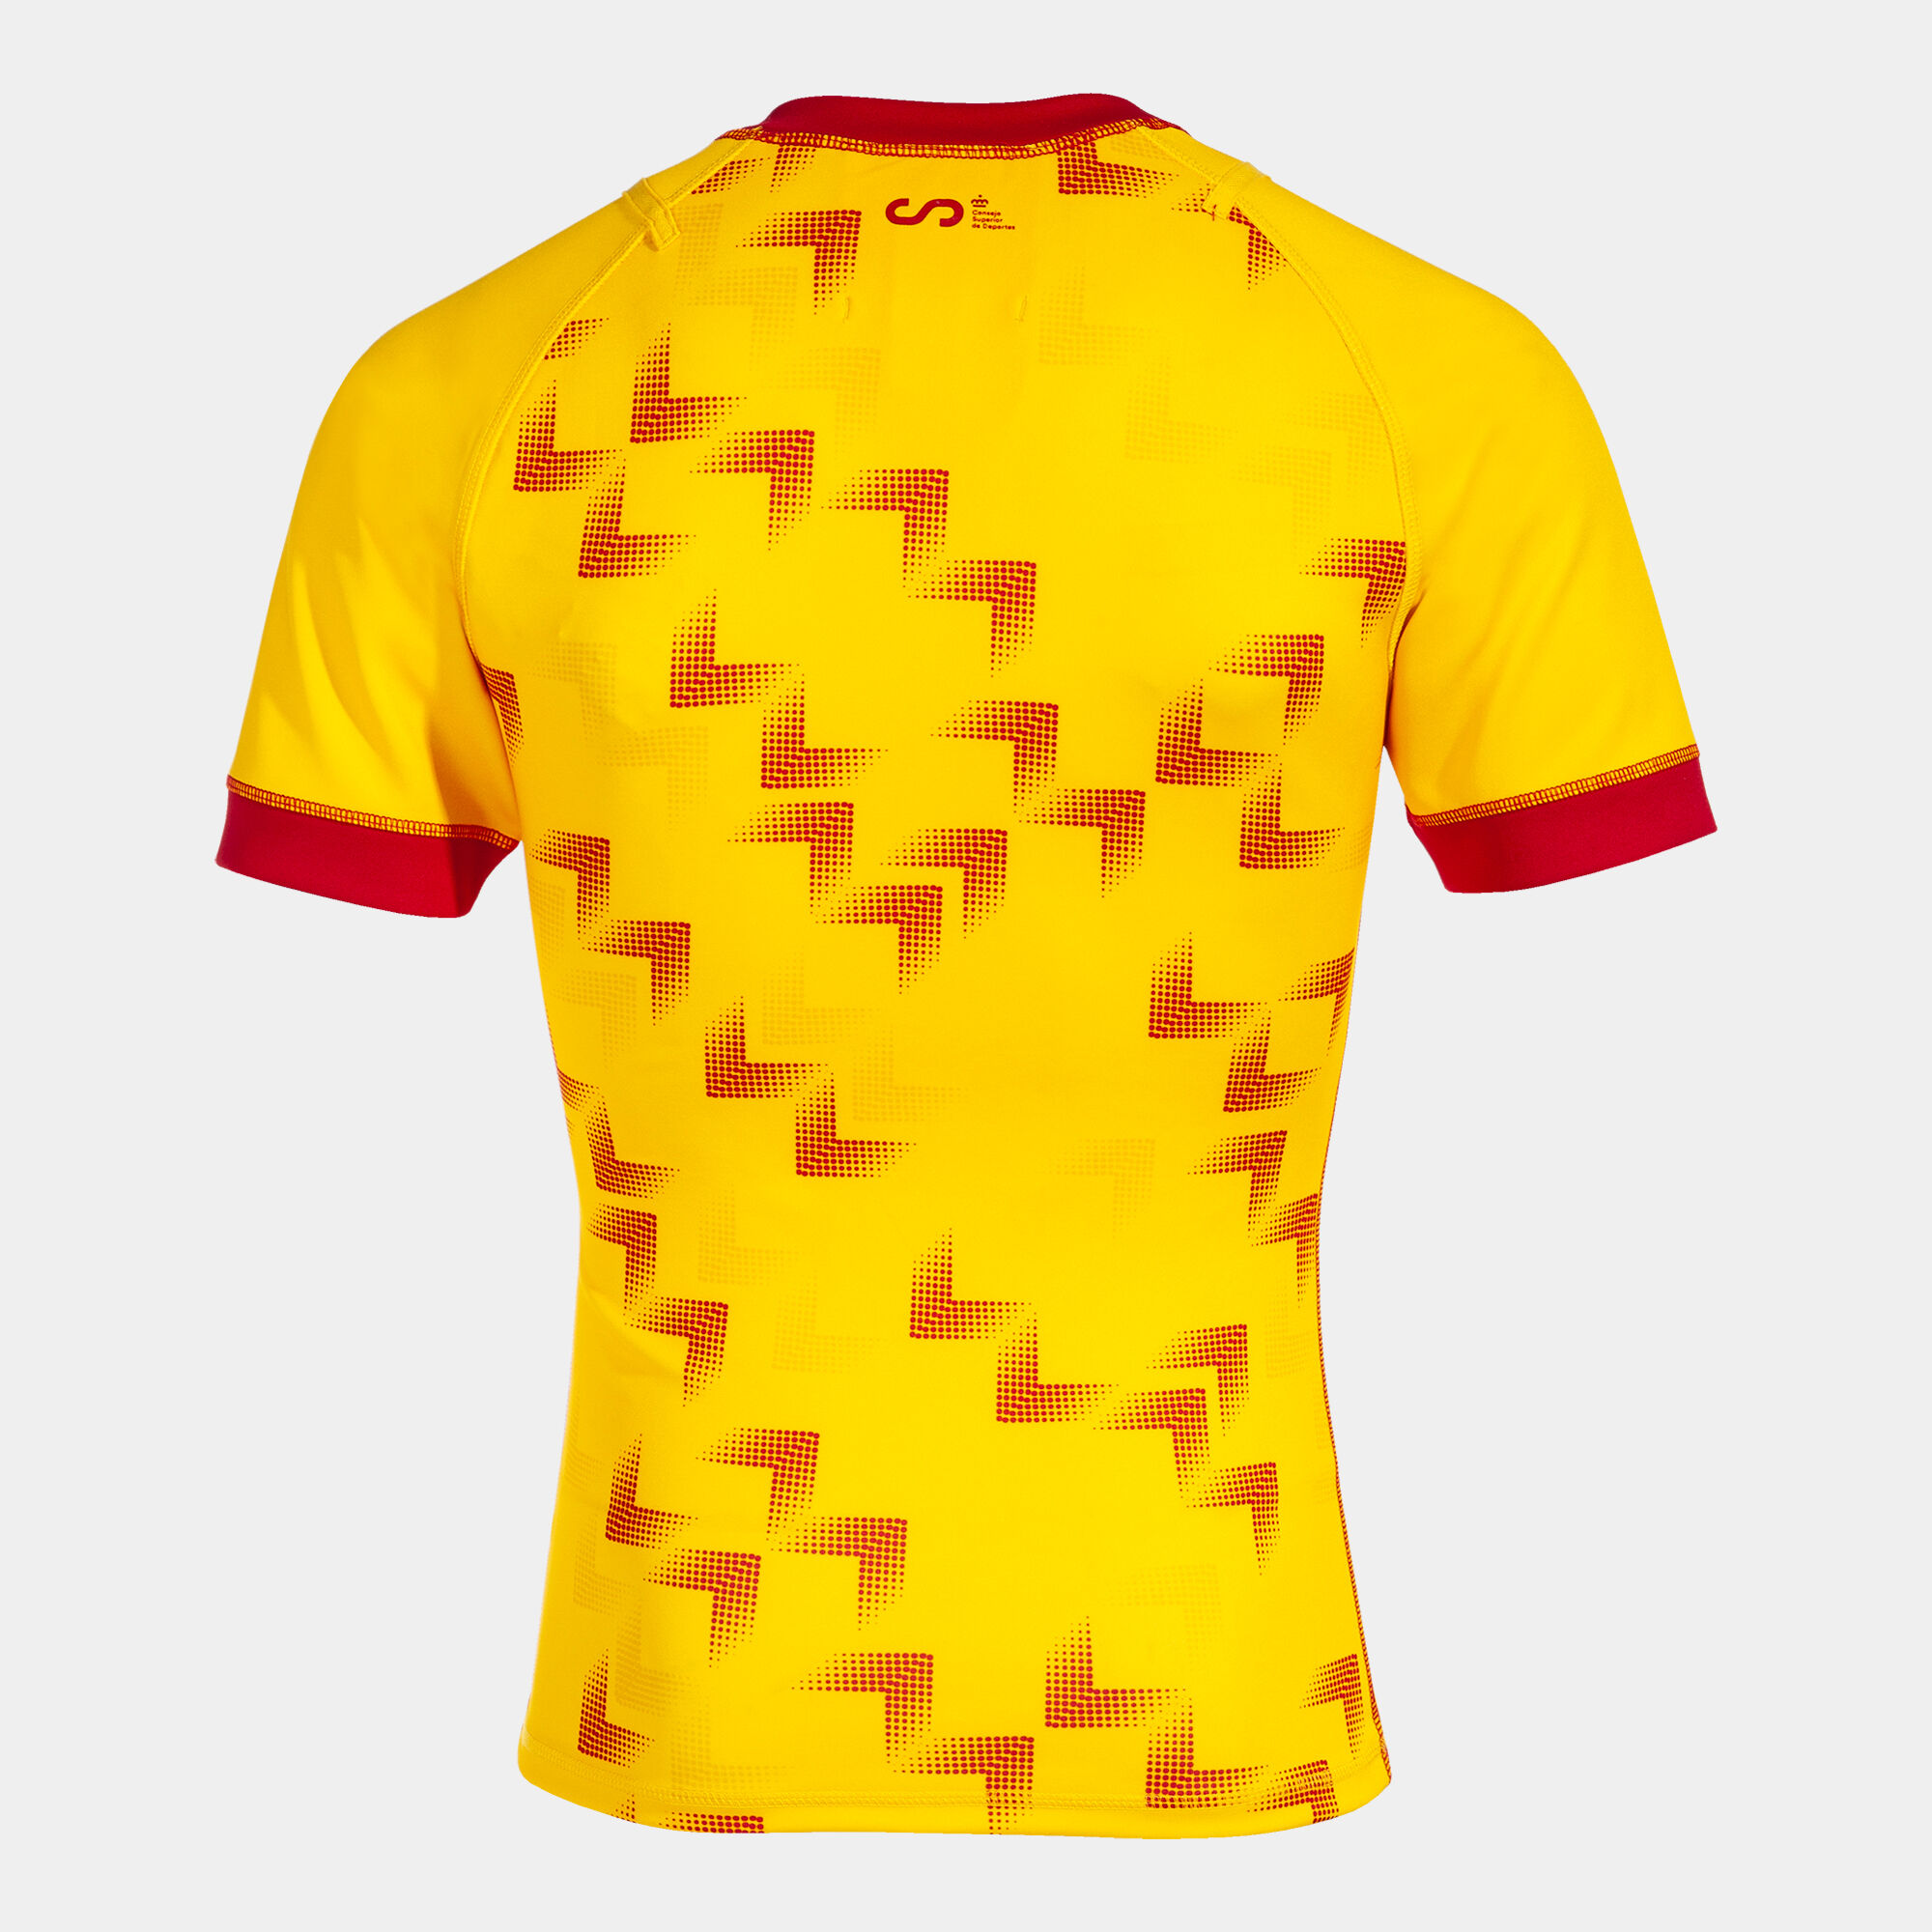 Shirt short sleeve away kit Spanish Rugby Federation